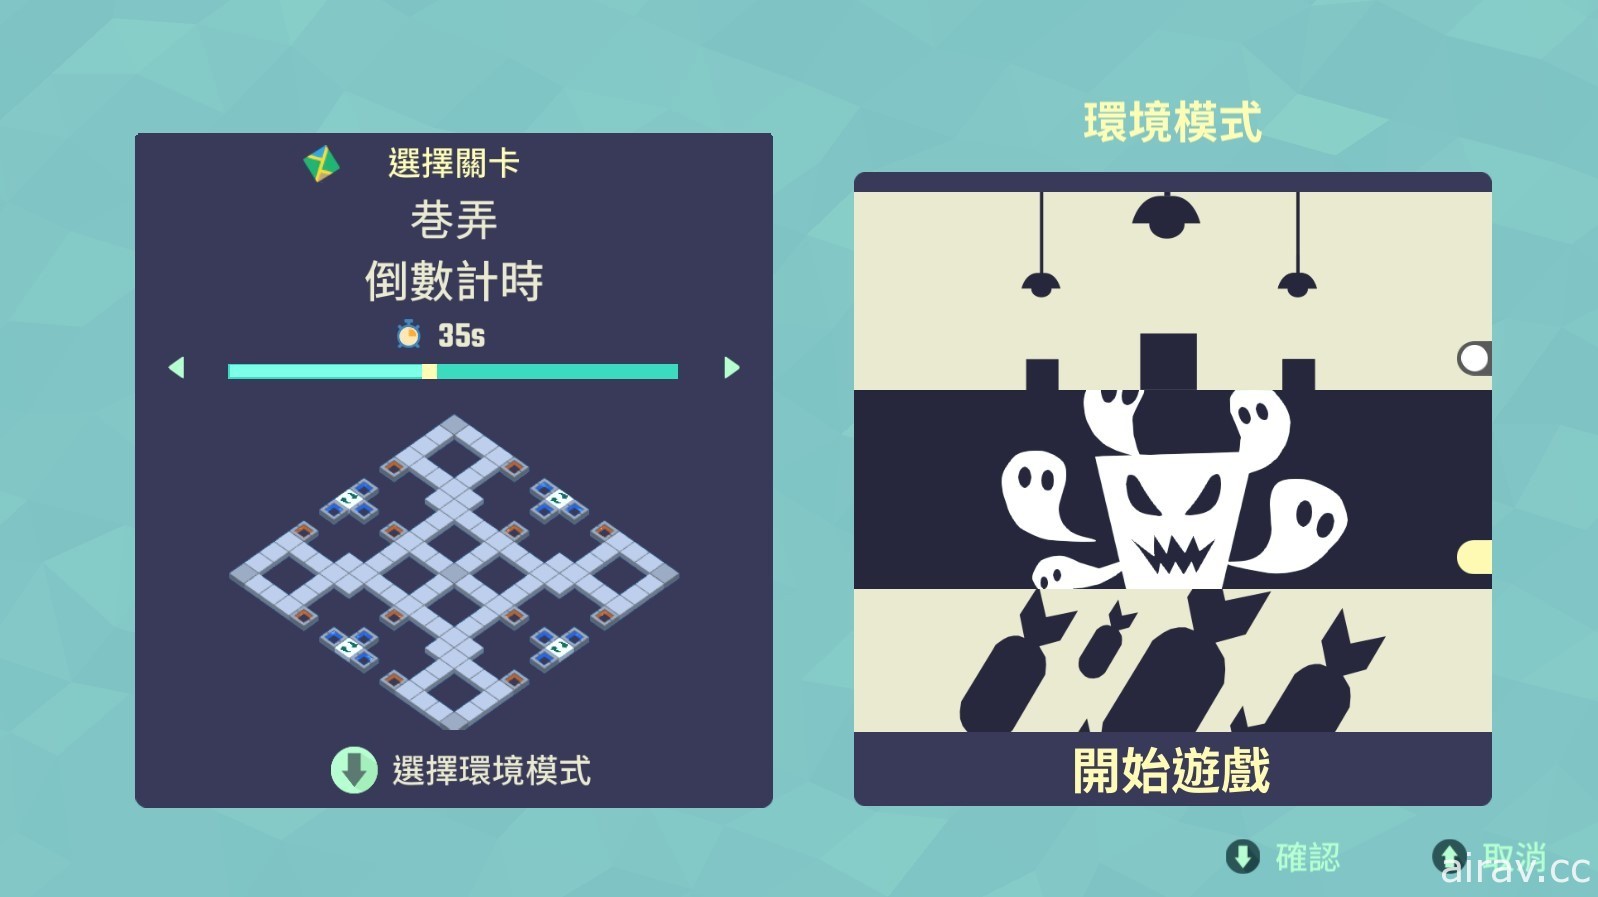 IGA 最佳遊戲設計、台灣團隊開發動作派對遊戲《給地偷地 Gerritory》登陸 Steam